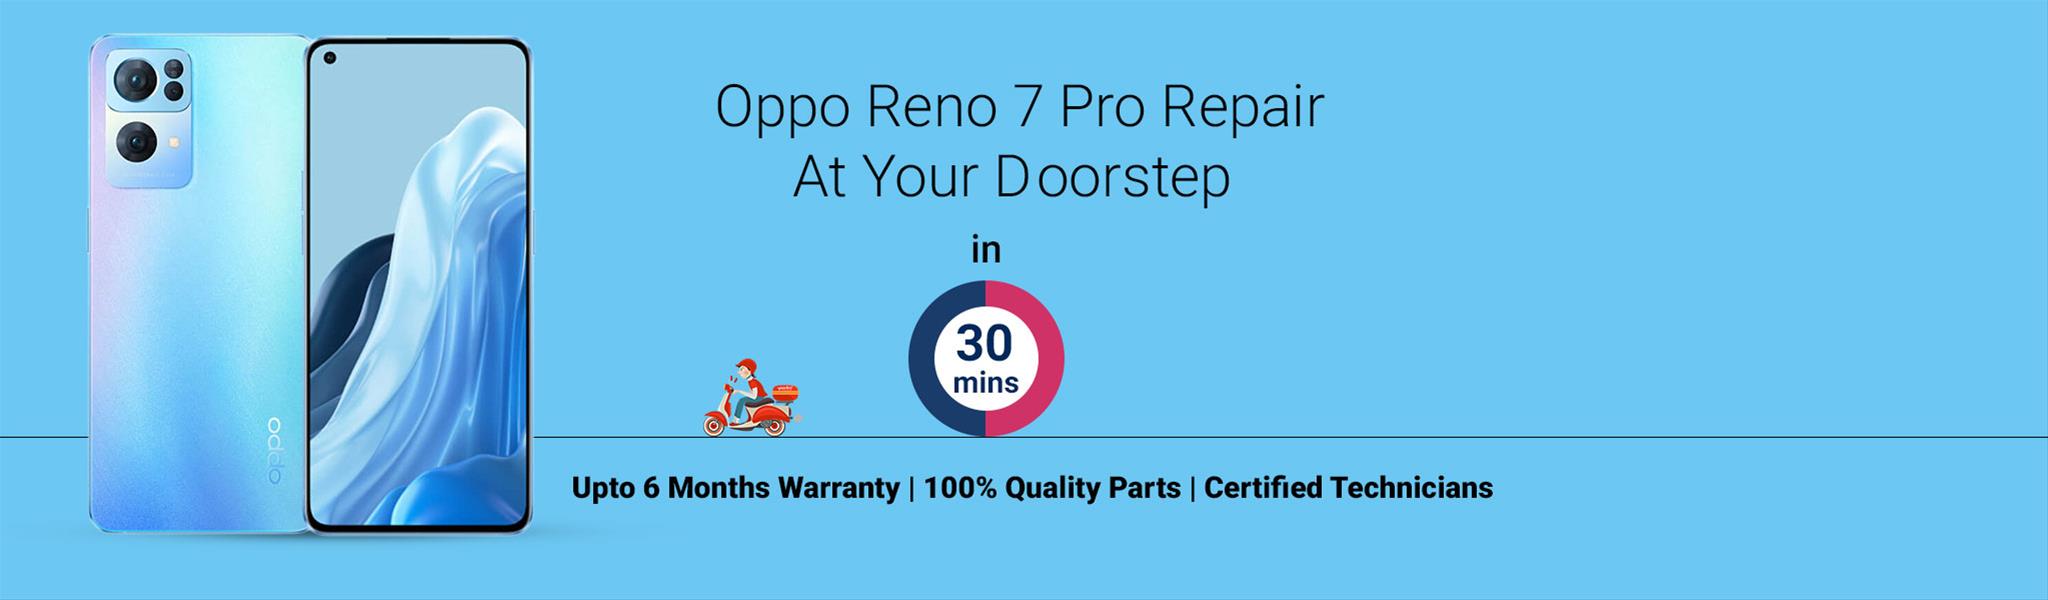 oppo-reno-7-pro-repair.jpg